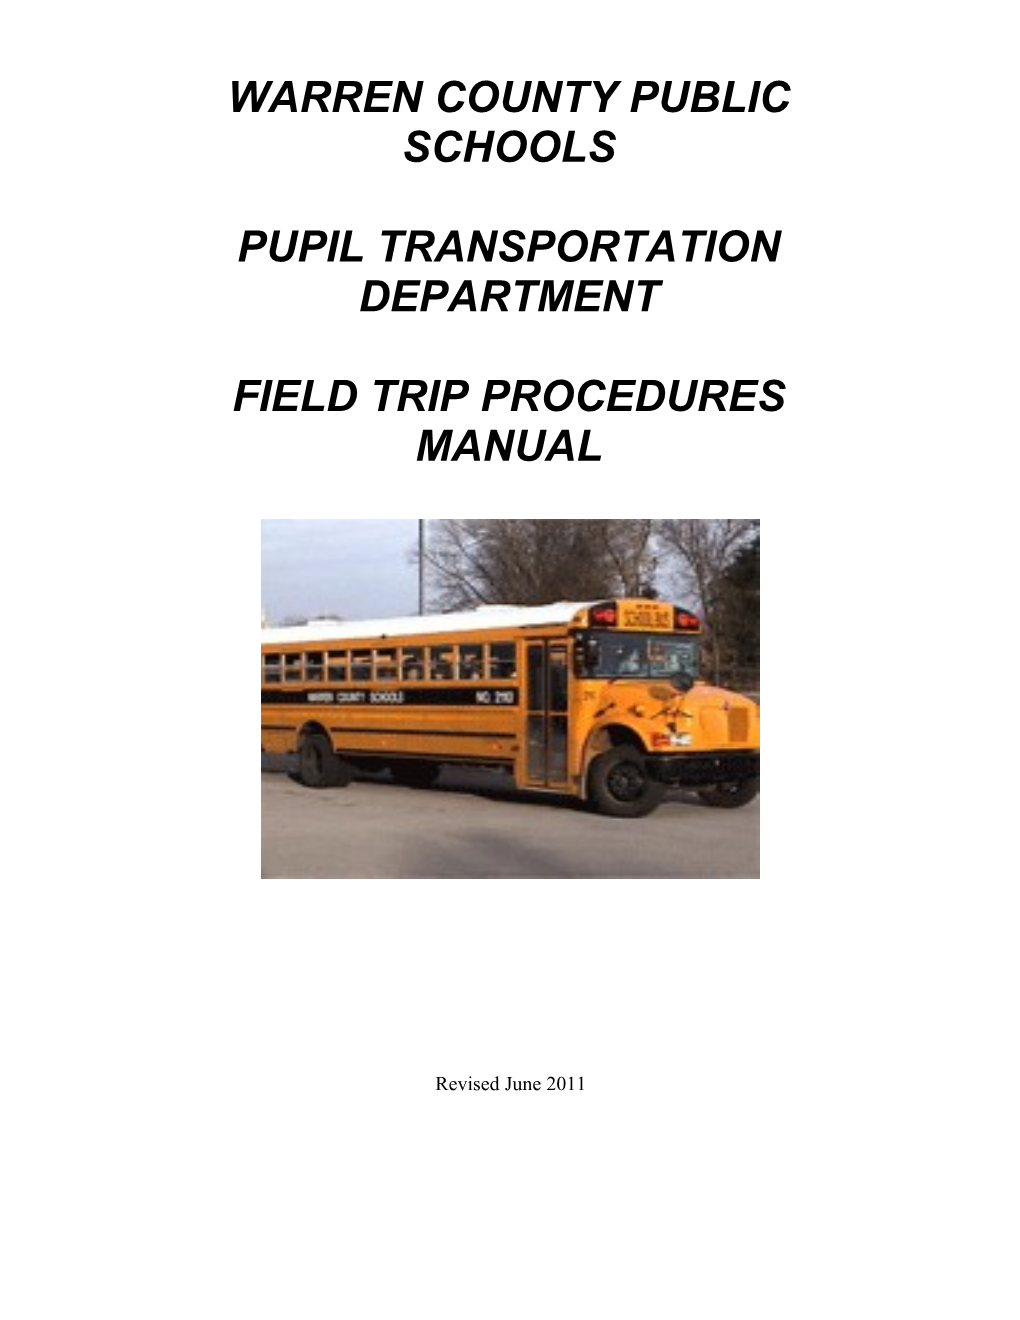 Field Trip Procedures Manuel